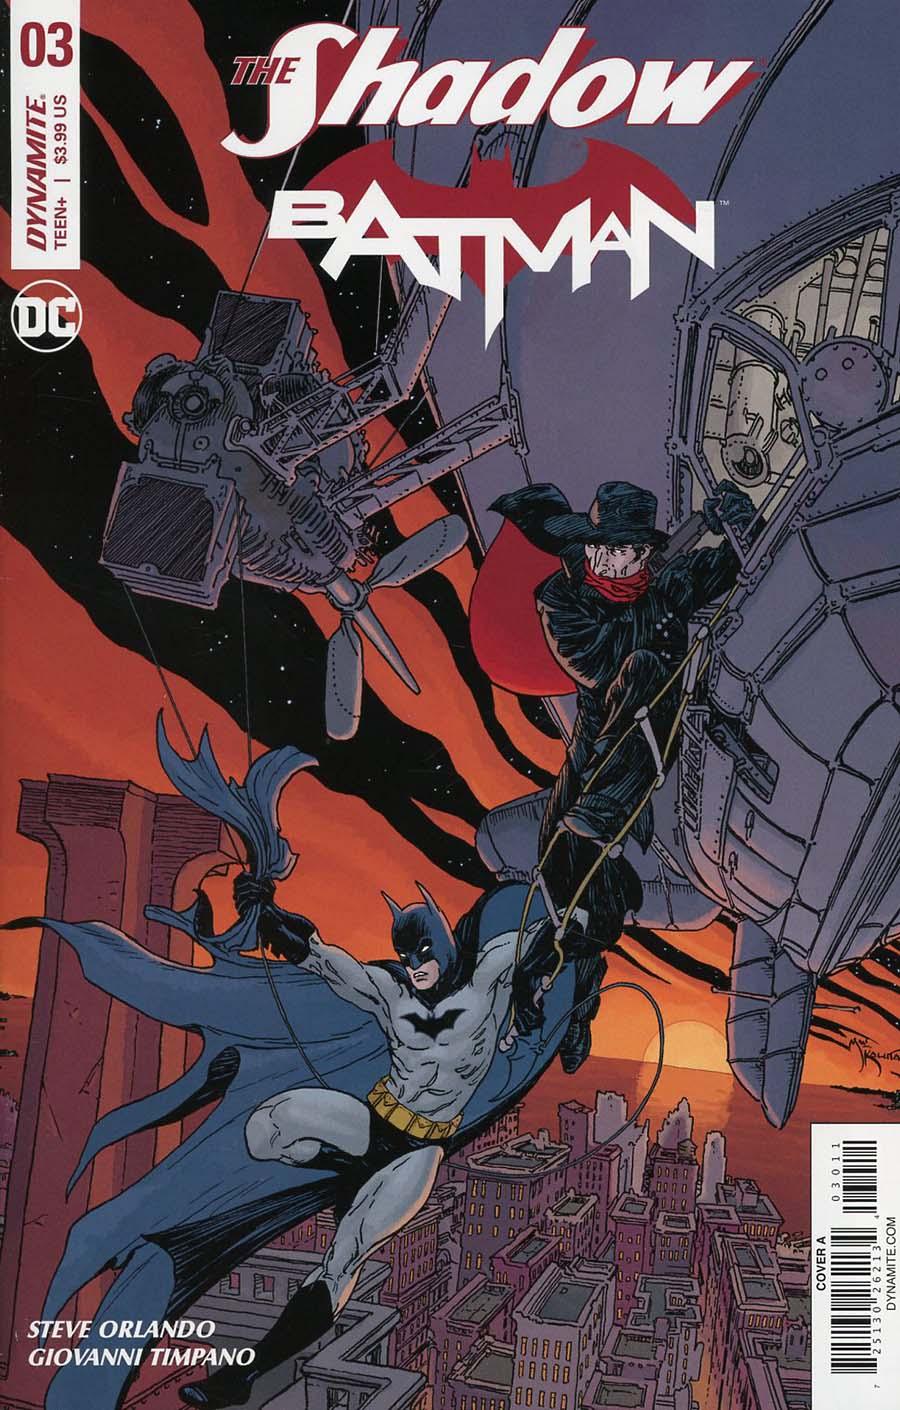 Shadow Batman Vol. 1 #3